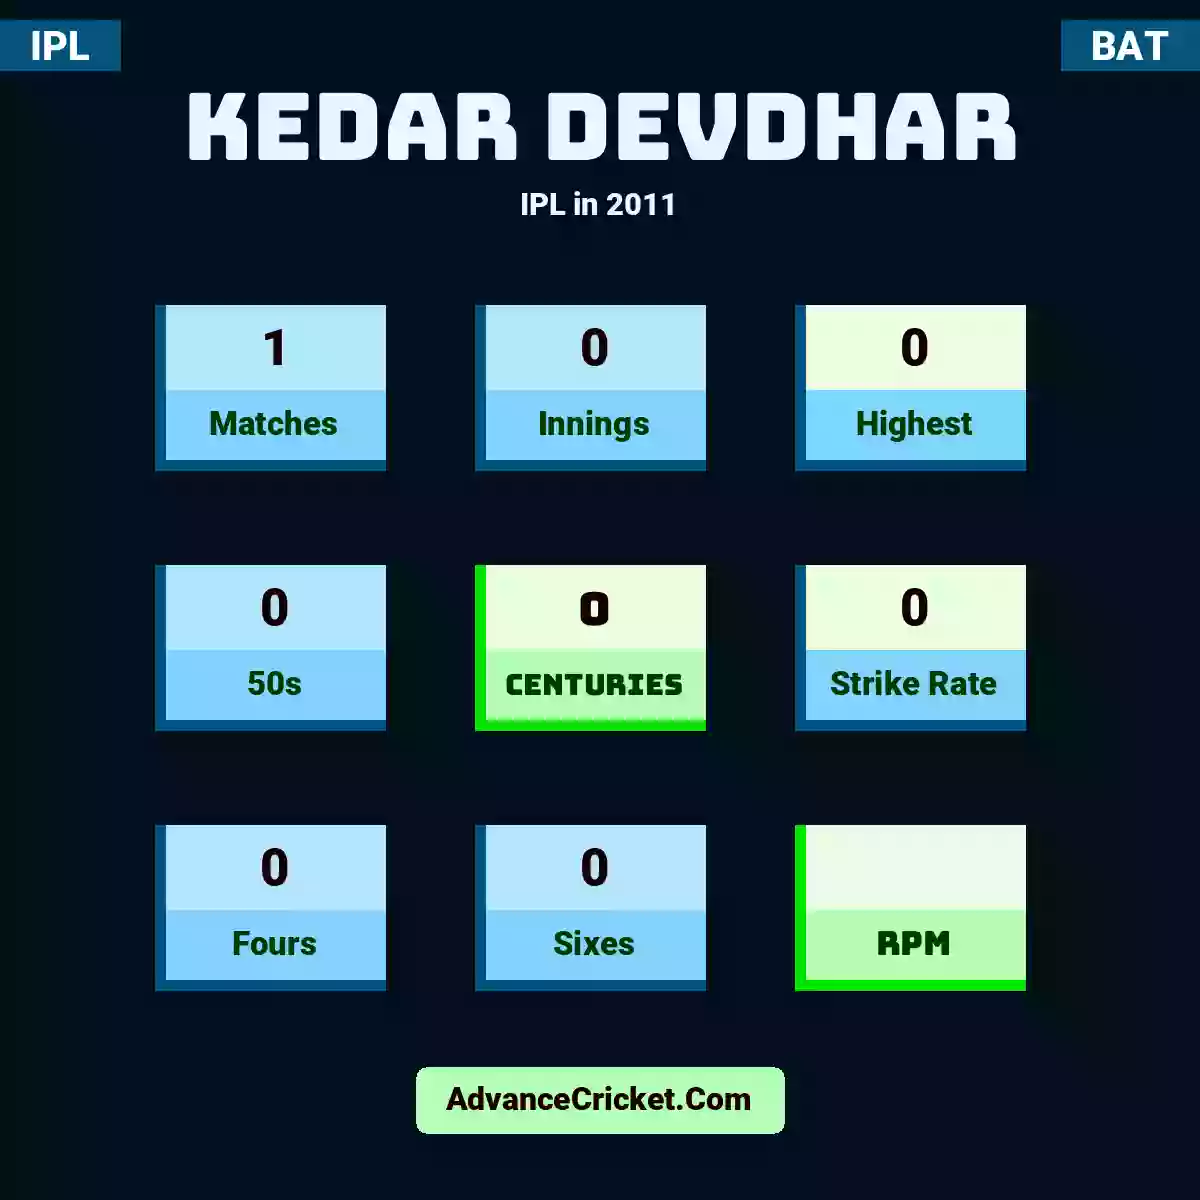 Kedar Devdhar IPL  in 2011, Kedar Devdhar played 1 matches, scored 0 runs as highest, 0 half-centuries, and 0 centuries, with a strike rate of 0. K.Devdhar hit 0 fours and 0 sixes.